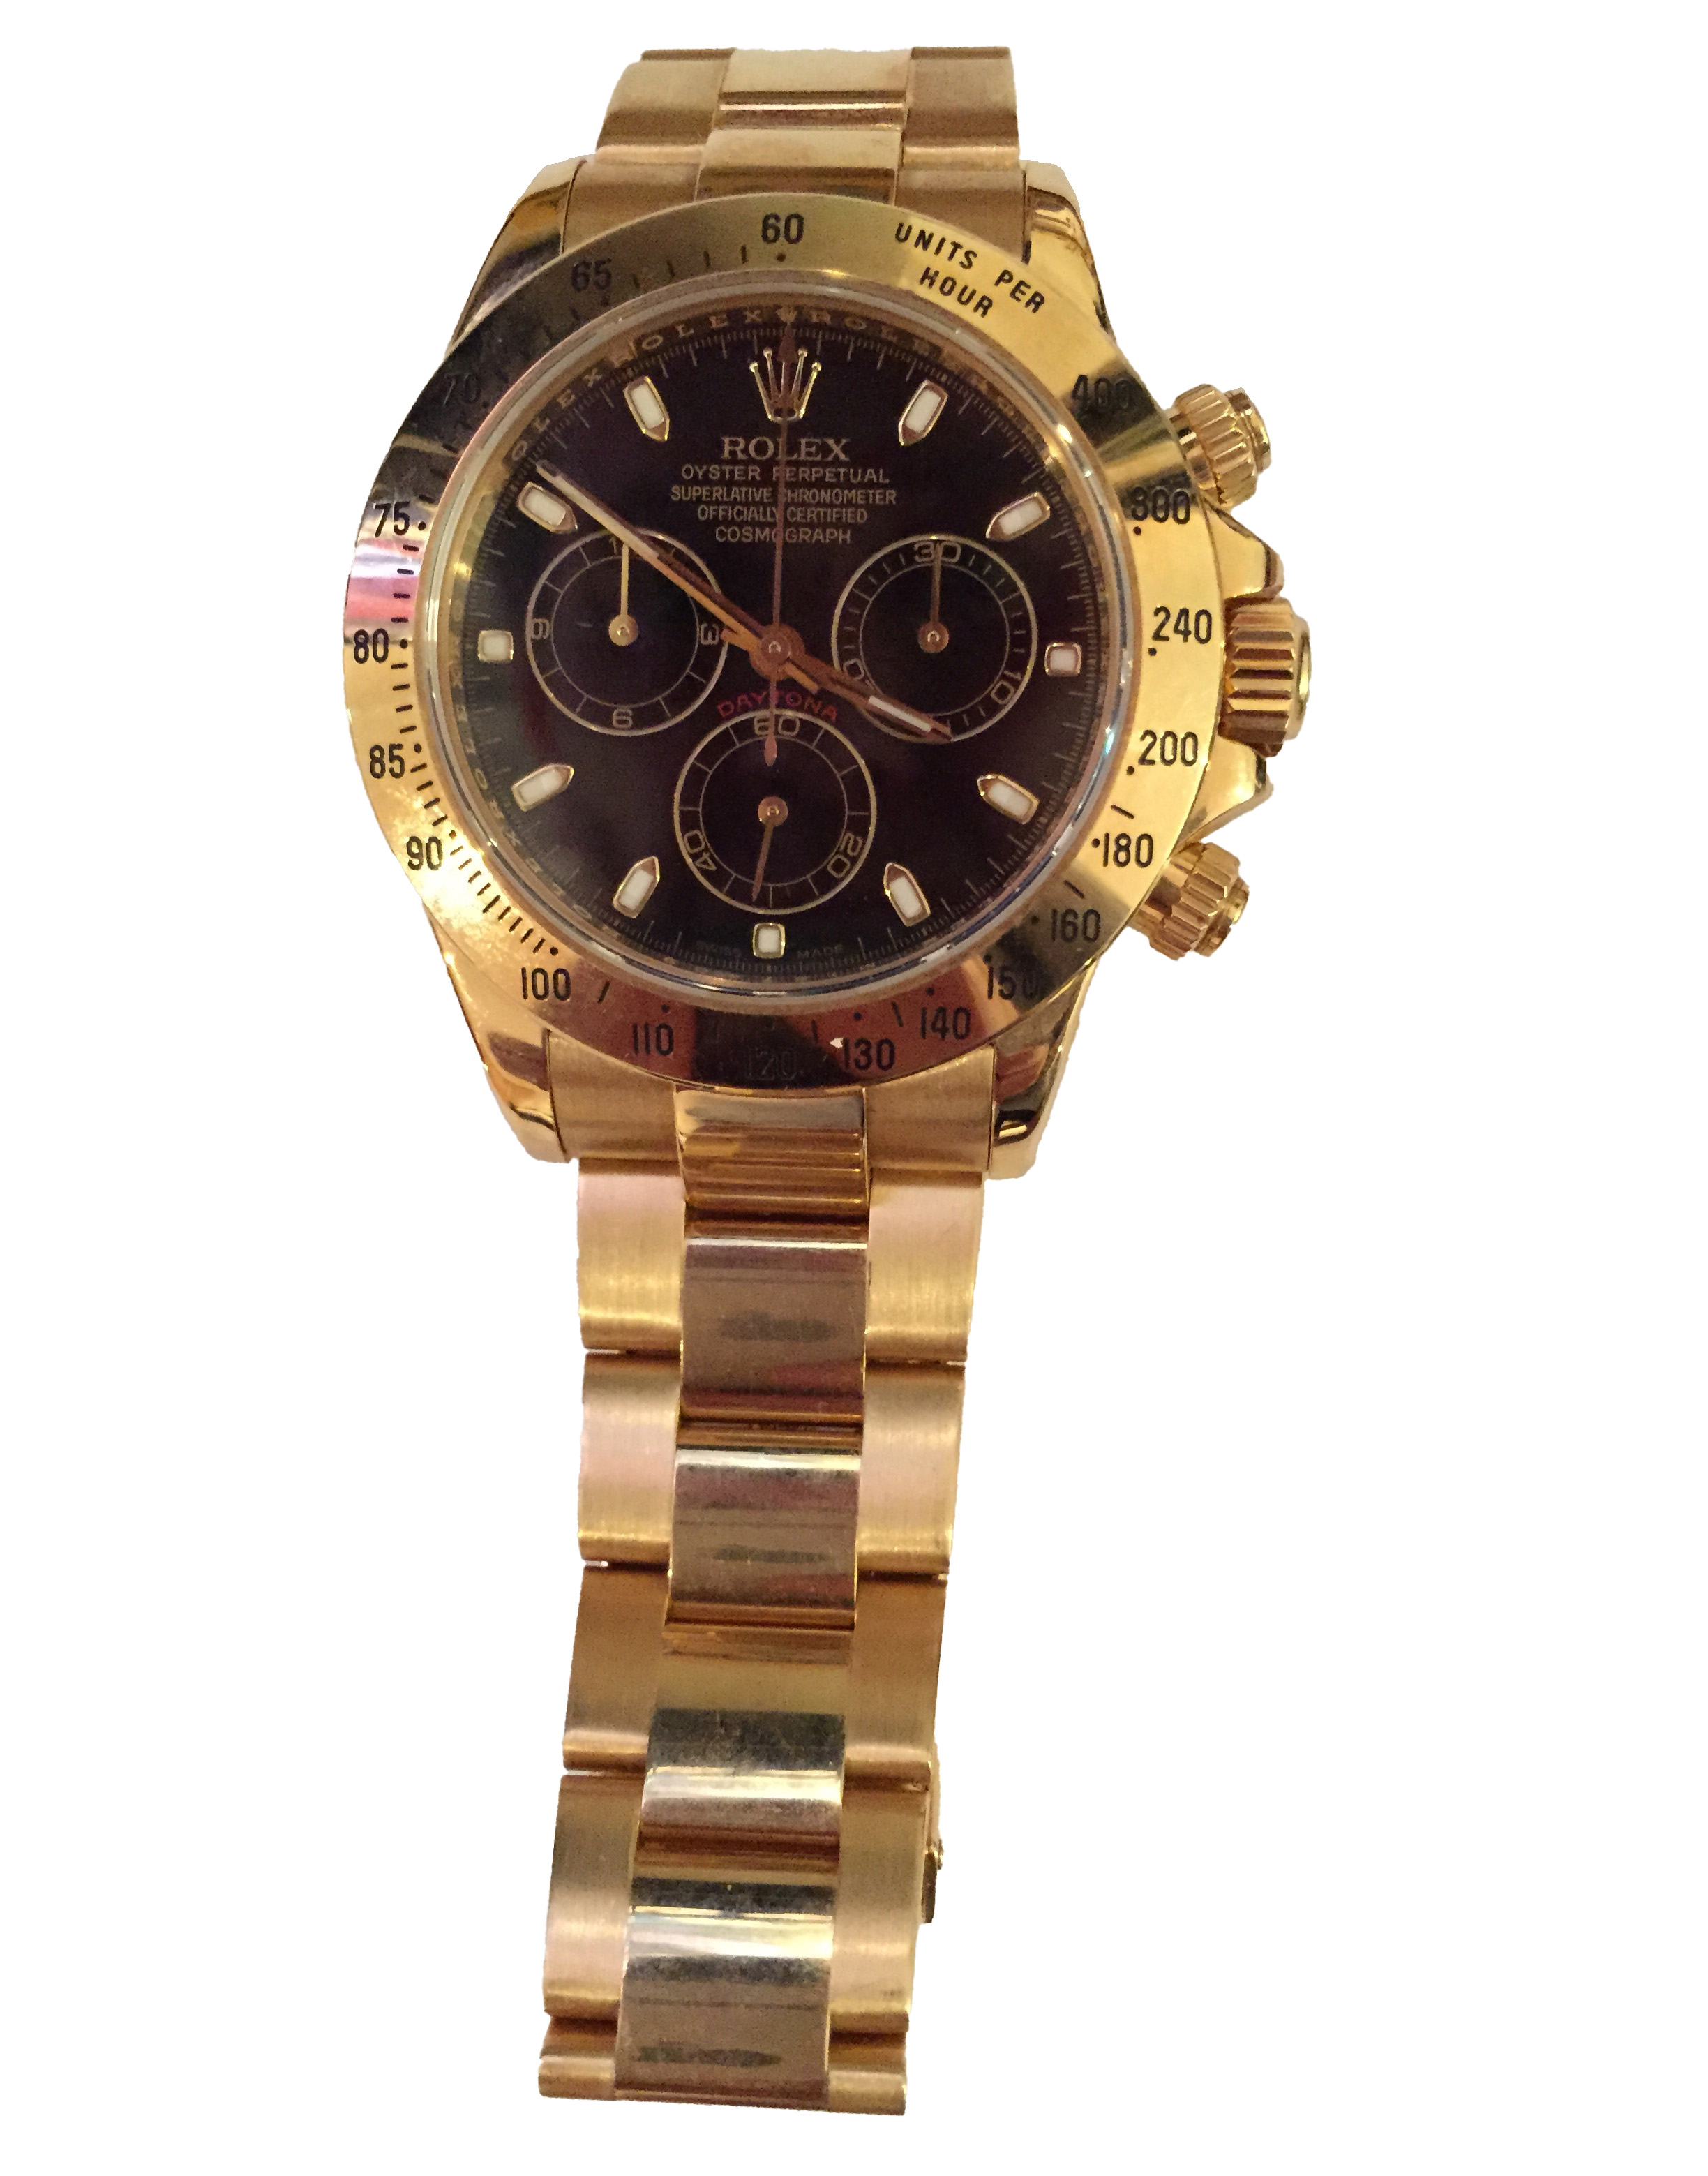 Rolex, Year 2010, #116528 40mm, Movement AUTOMATIC Chronograph, Model: Daytona Yellow Gold, Black - Image 2 of 5